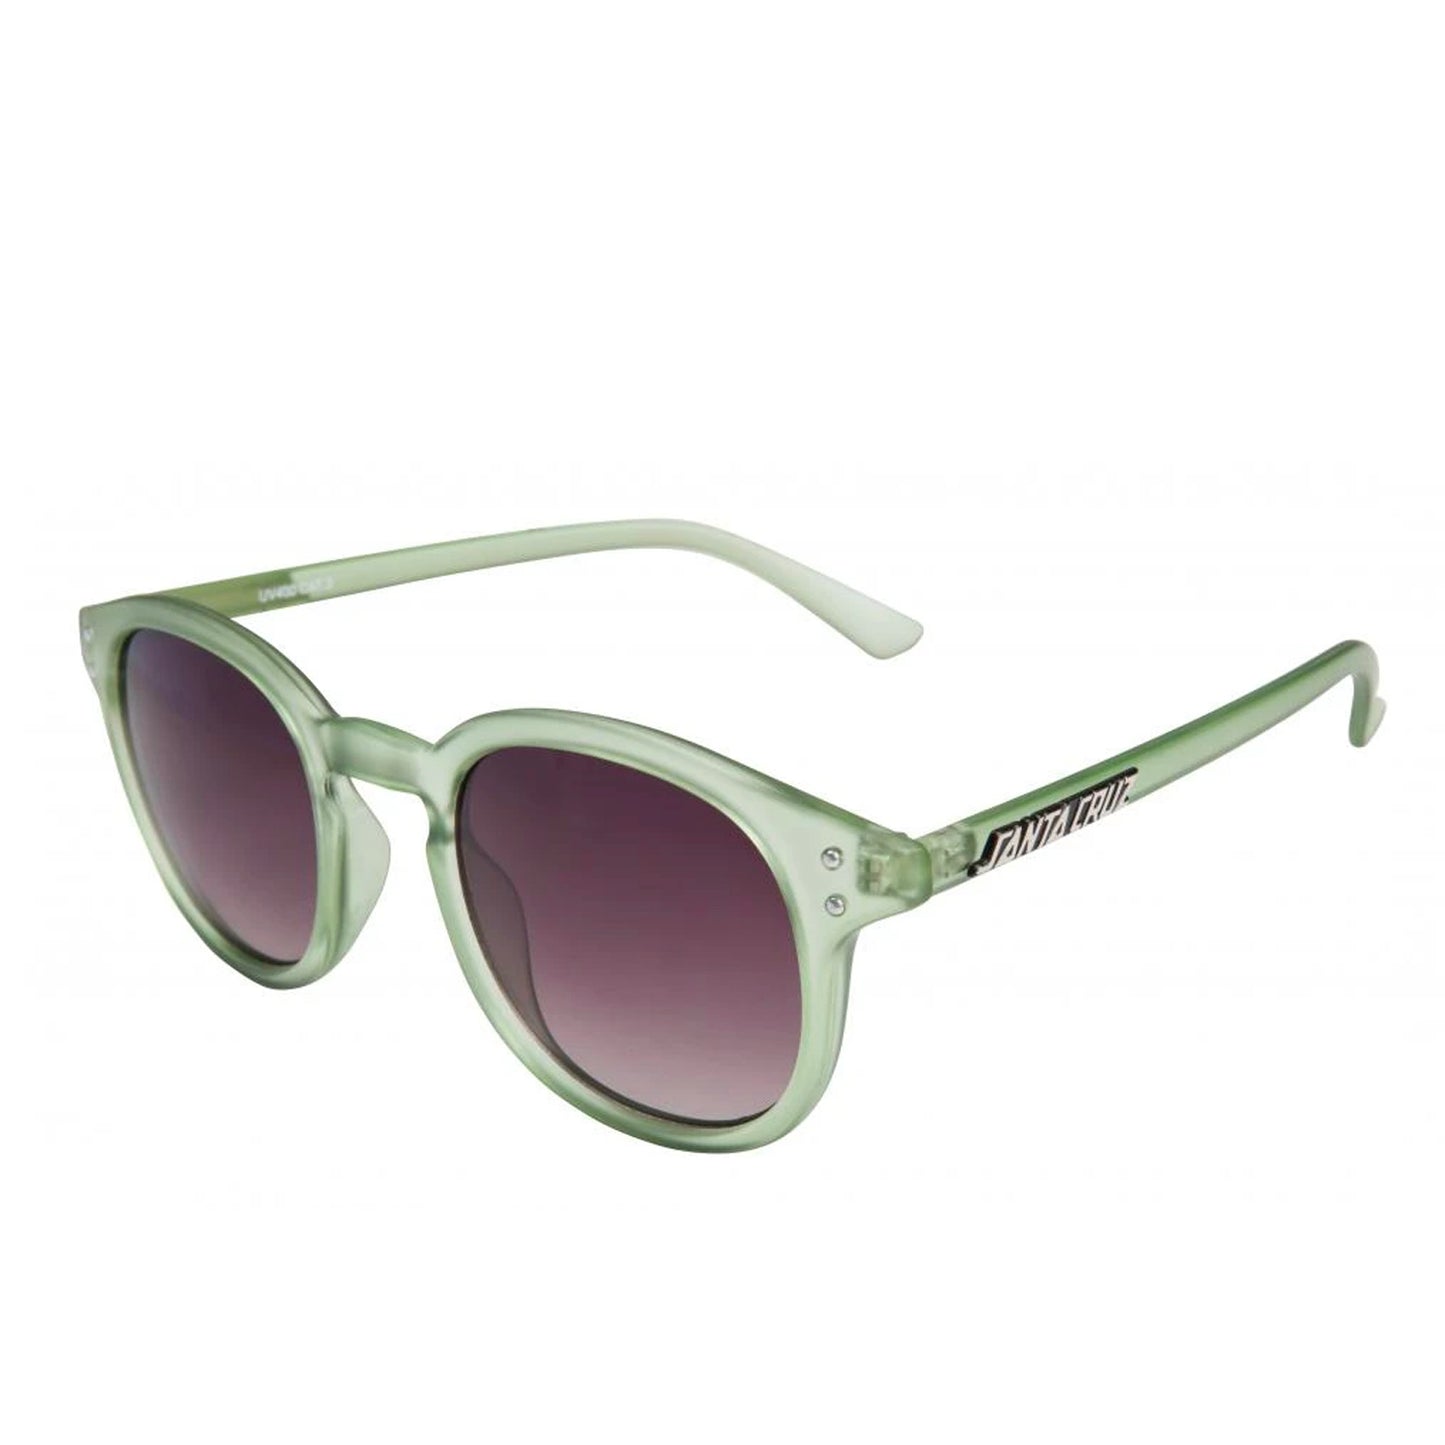 Santa Cruz Watson Sunglasses - Military - Prime Delux Store